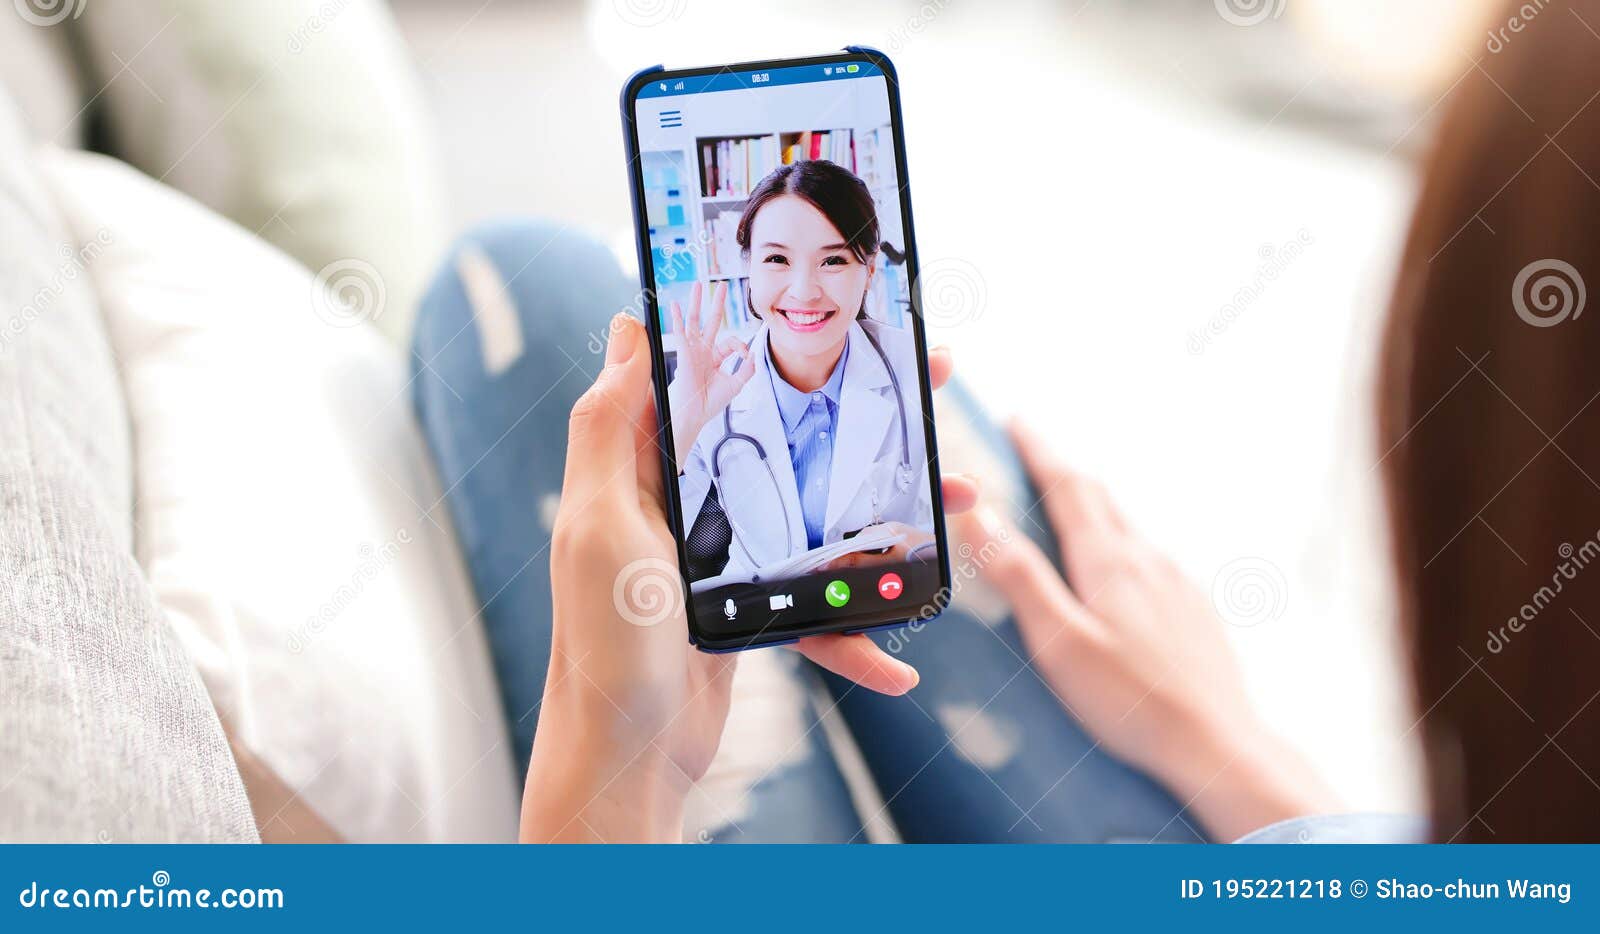 telemedicine by smart phone